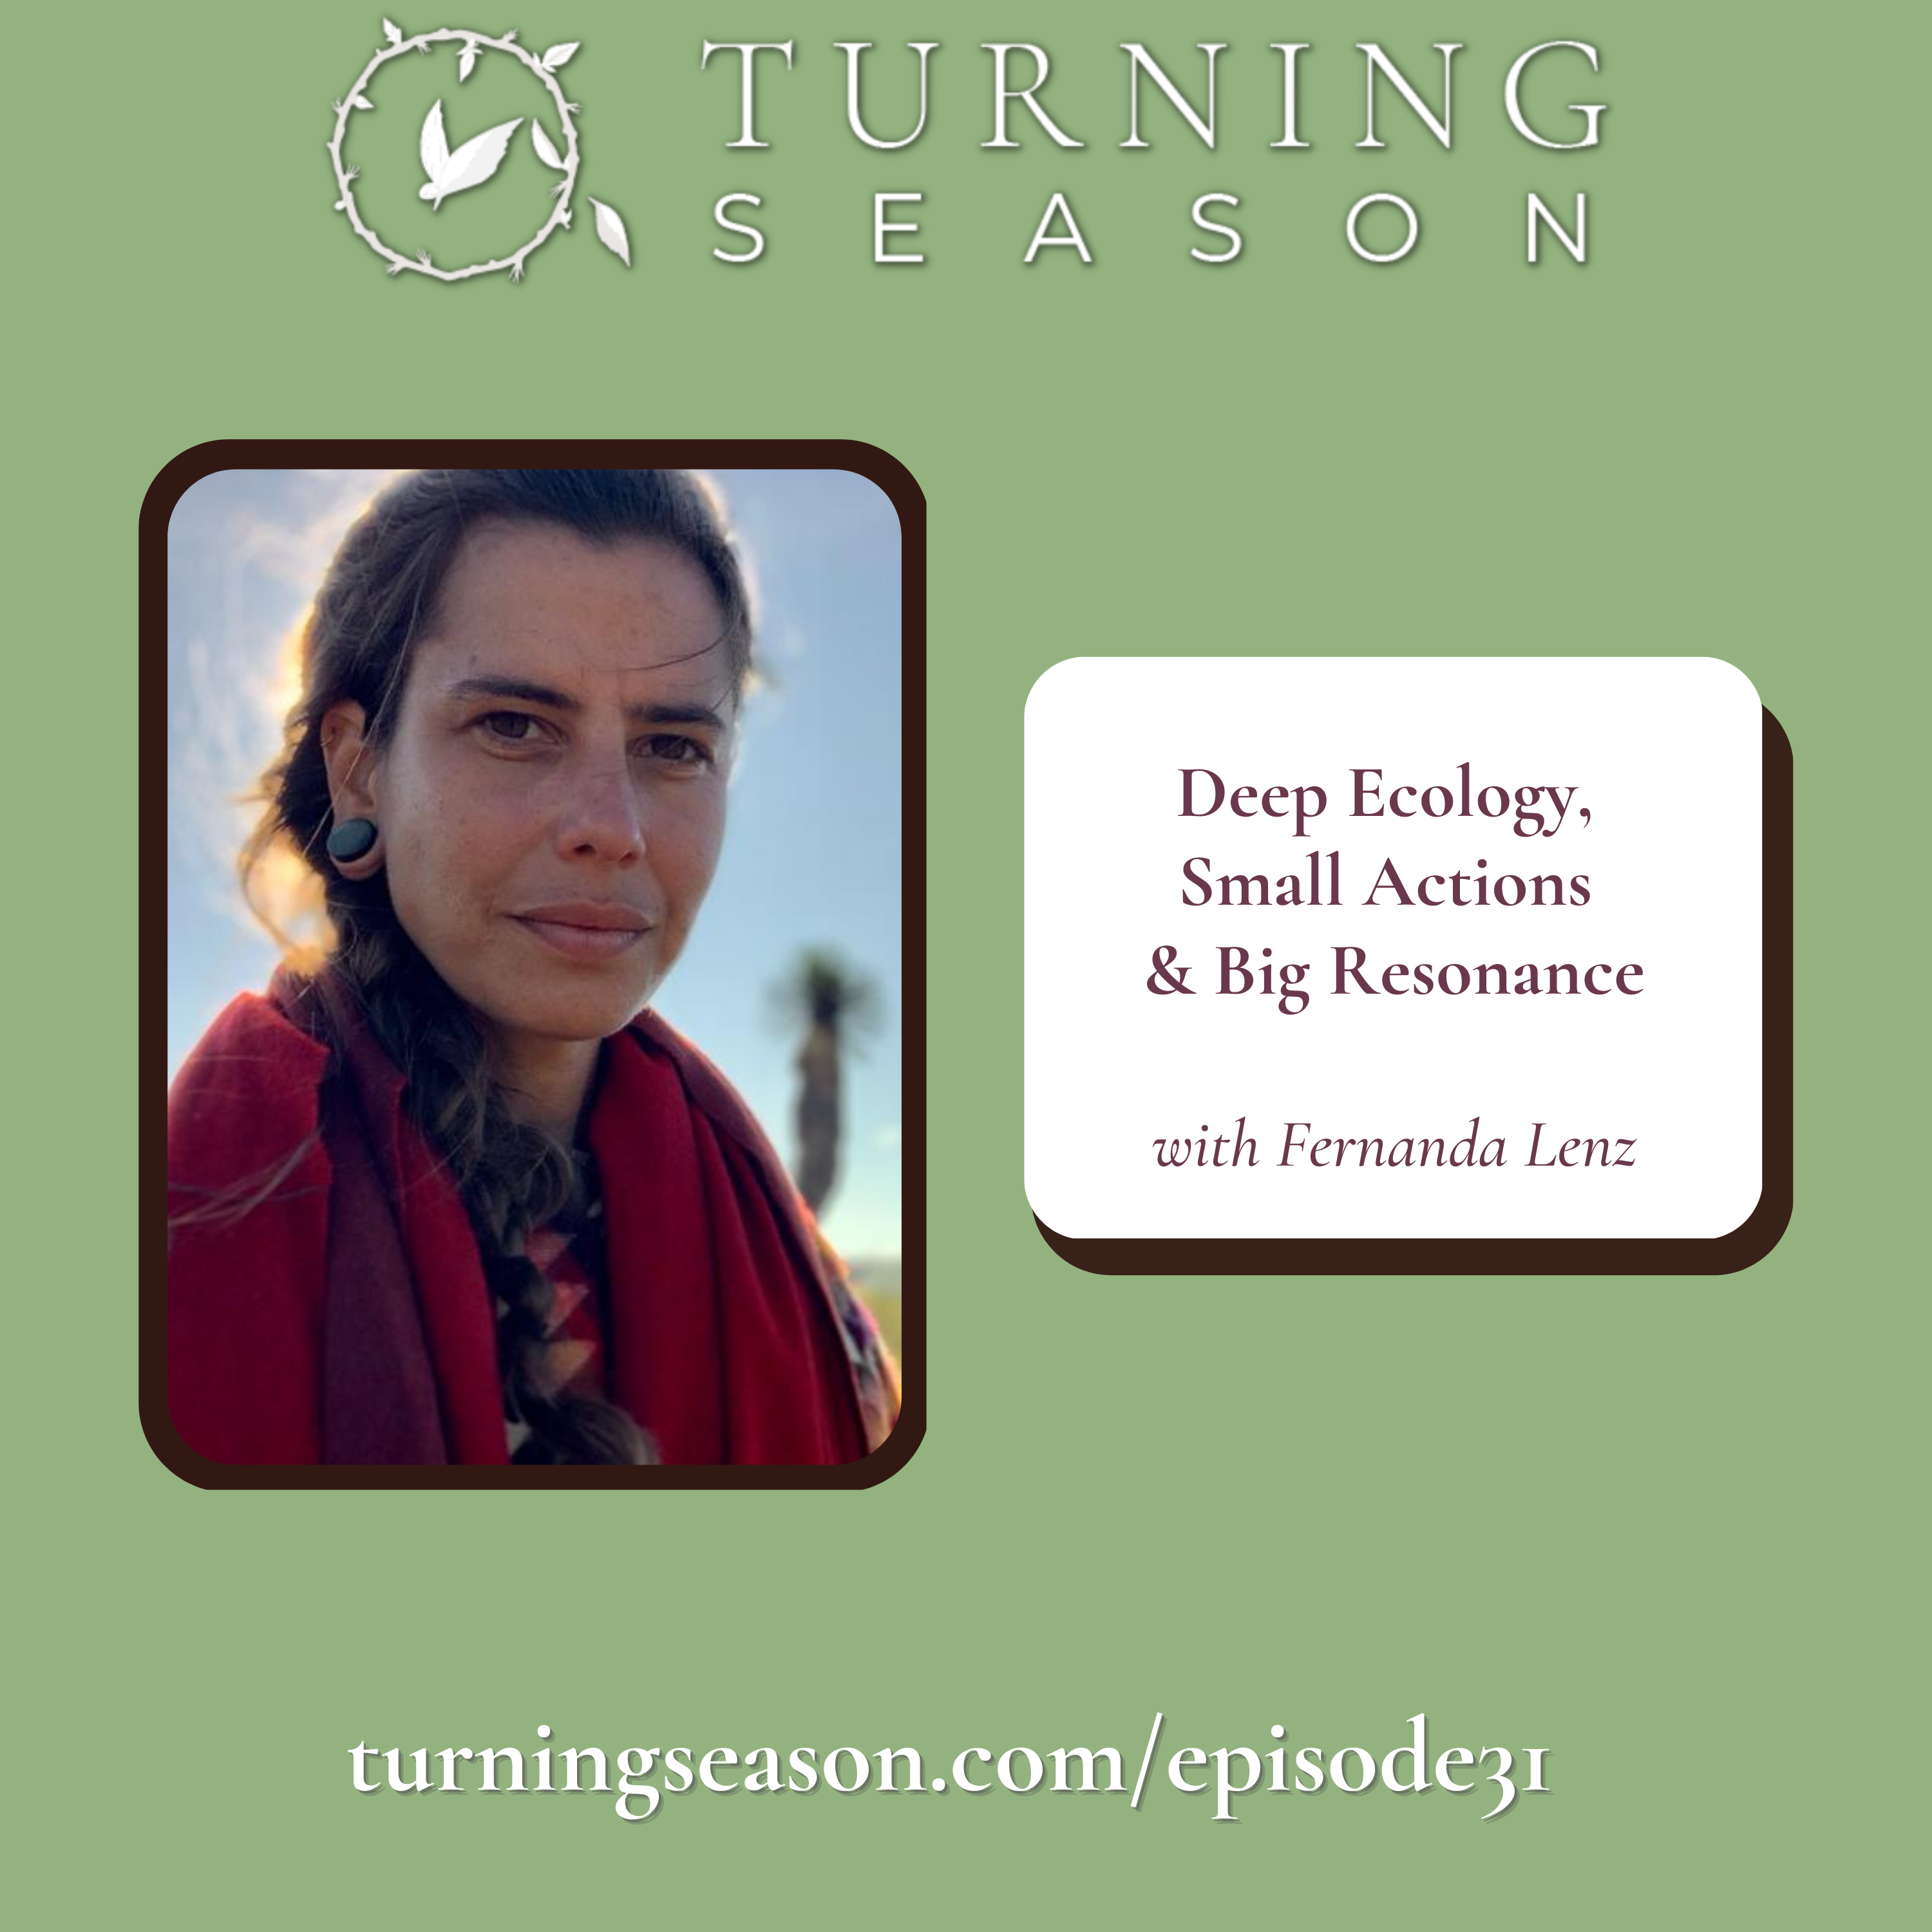 _Turning Season Podcast Episode 31 with Fernanda Lenz hosted by Leilani Navar turningseason.com